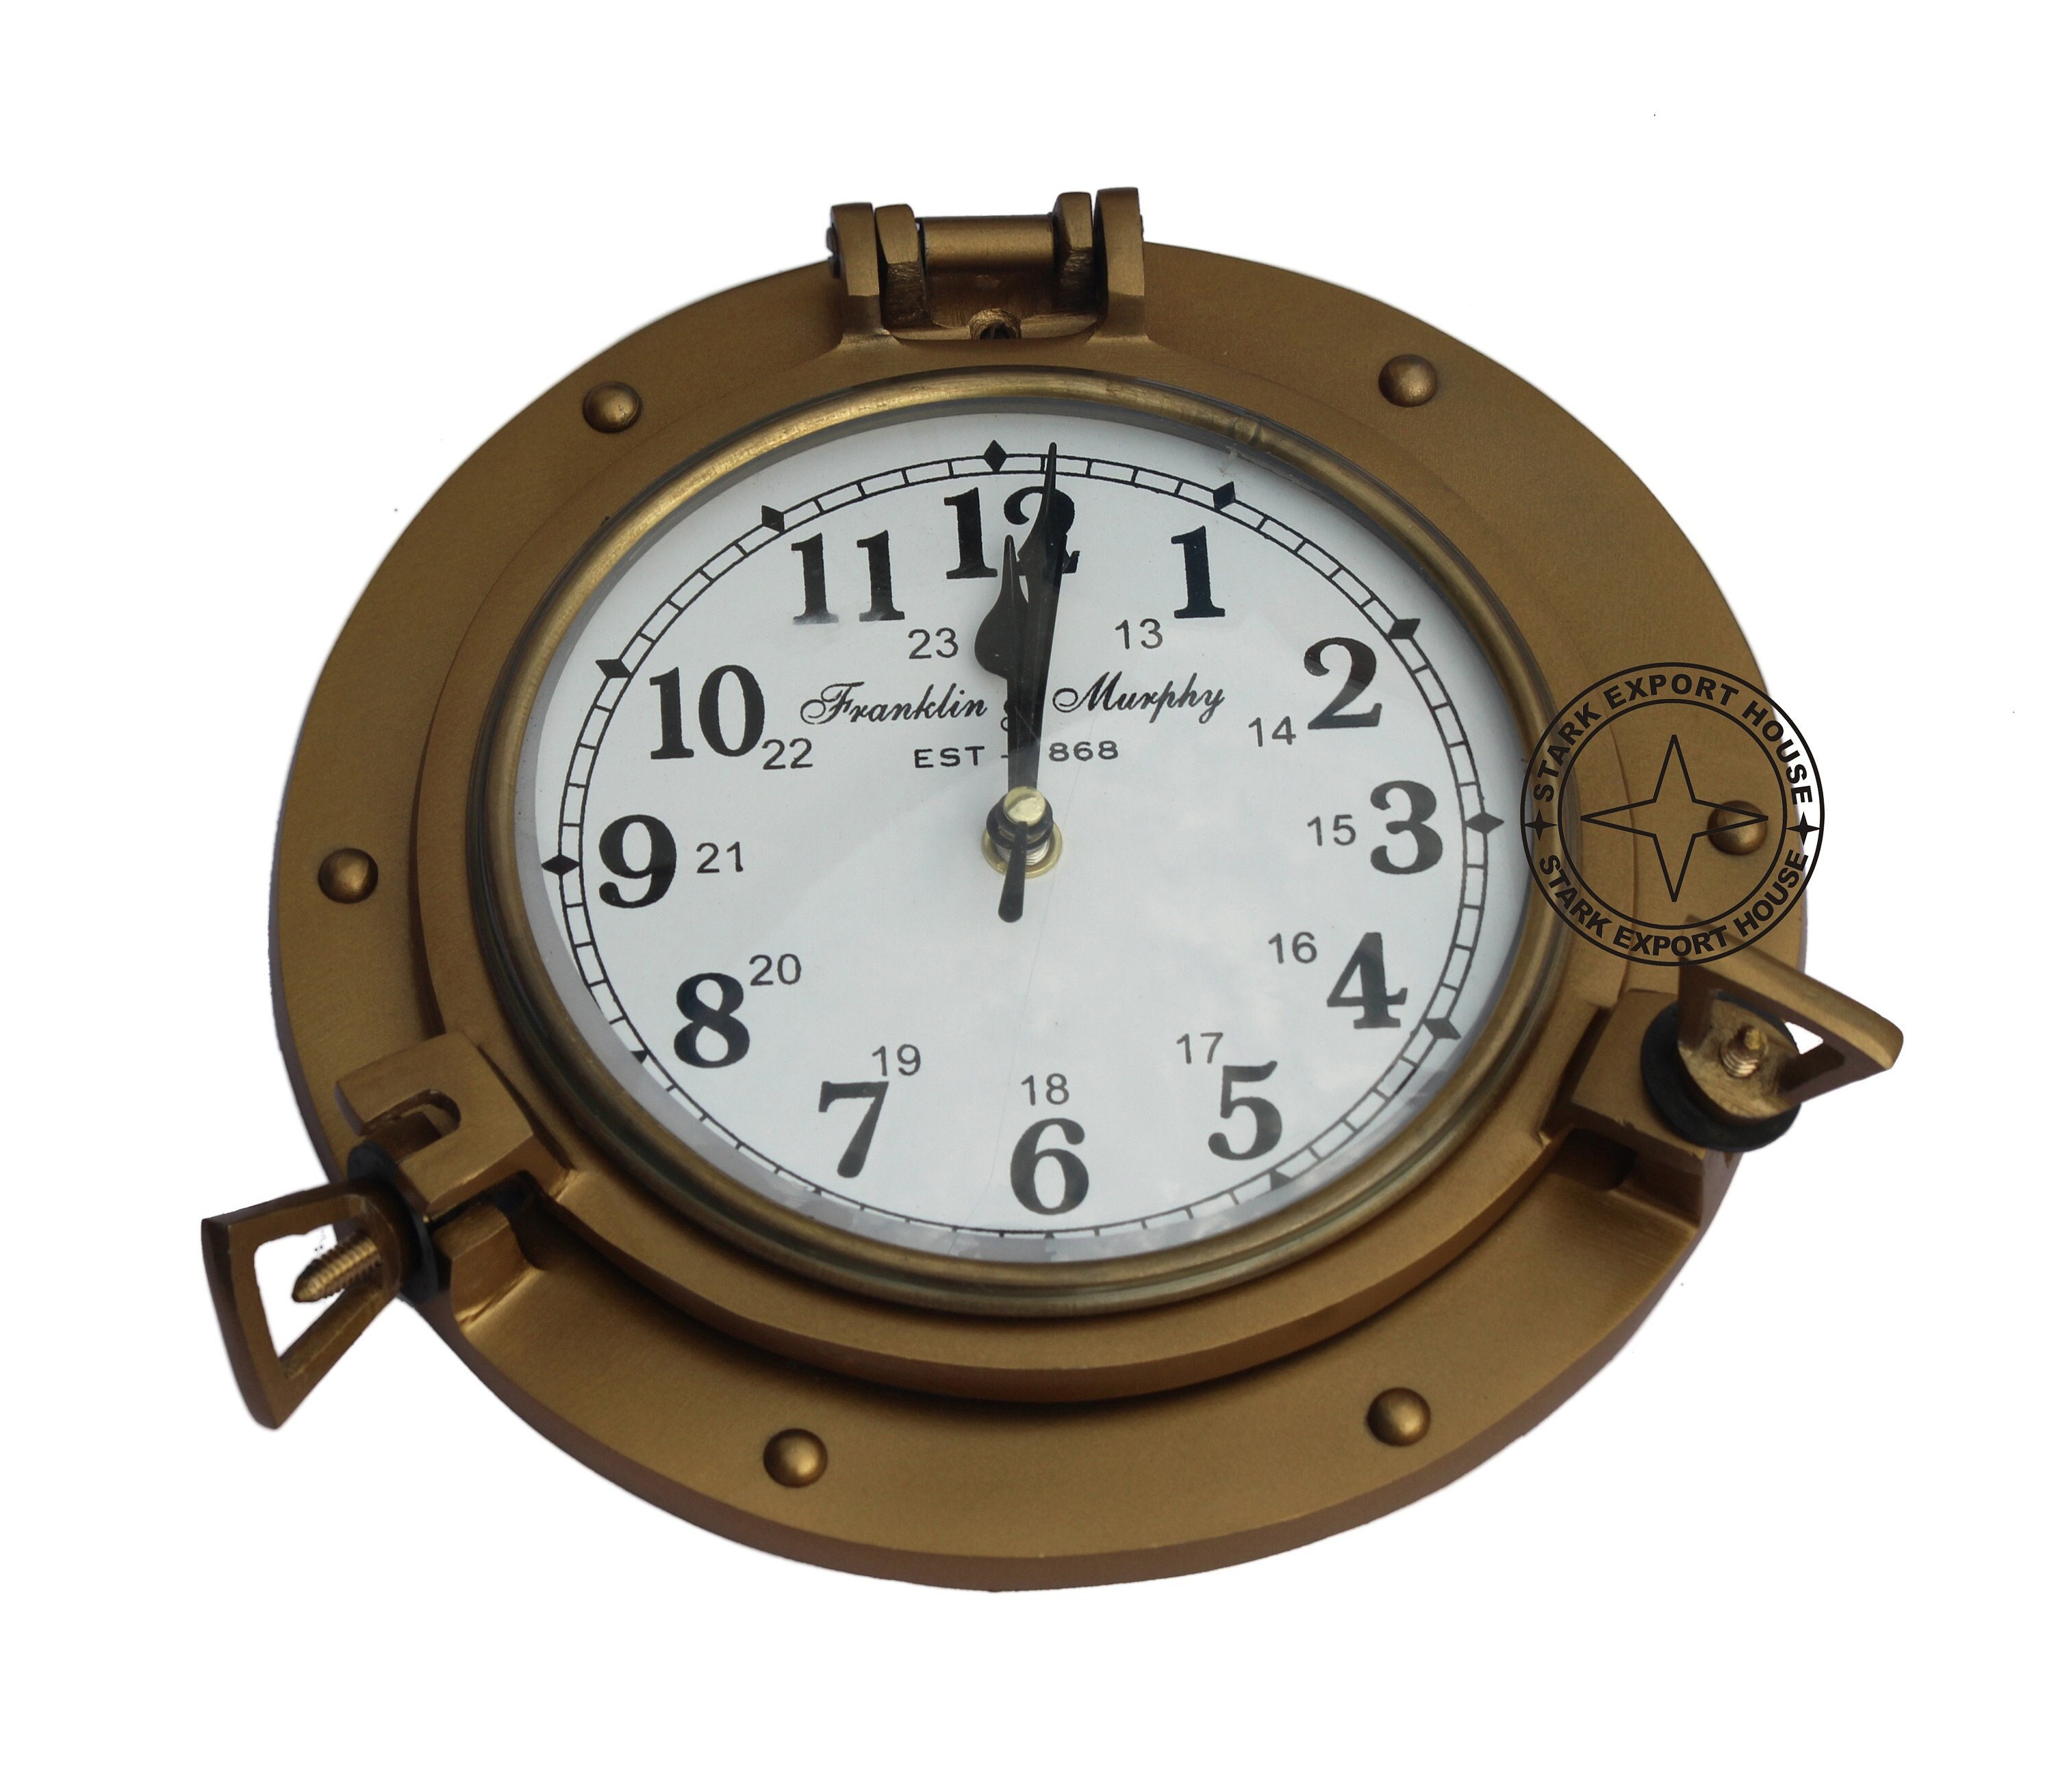 Antique Nautical Navigation Marine Ship Brass Porthole Clock Brass